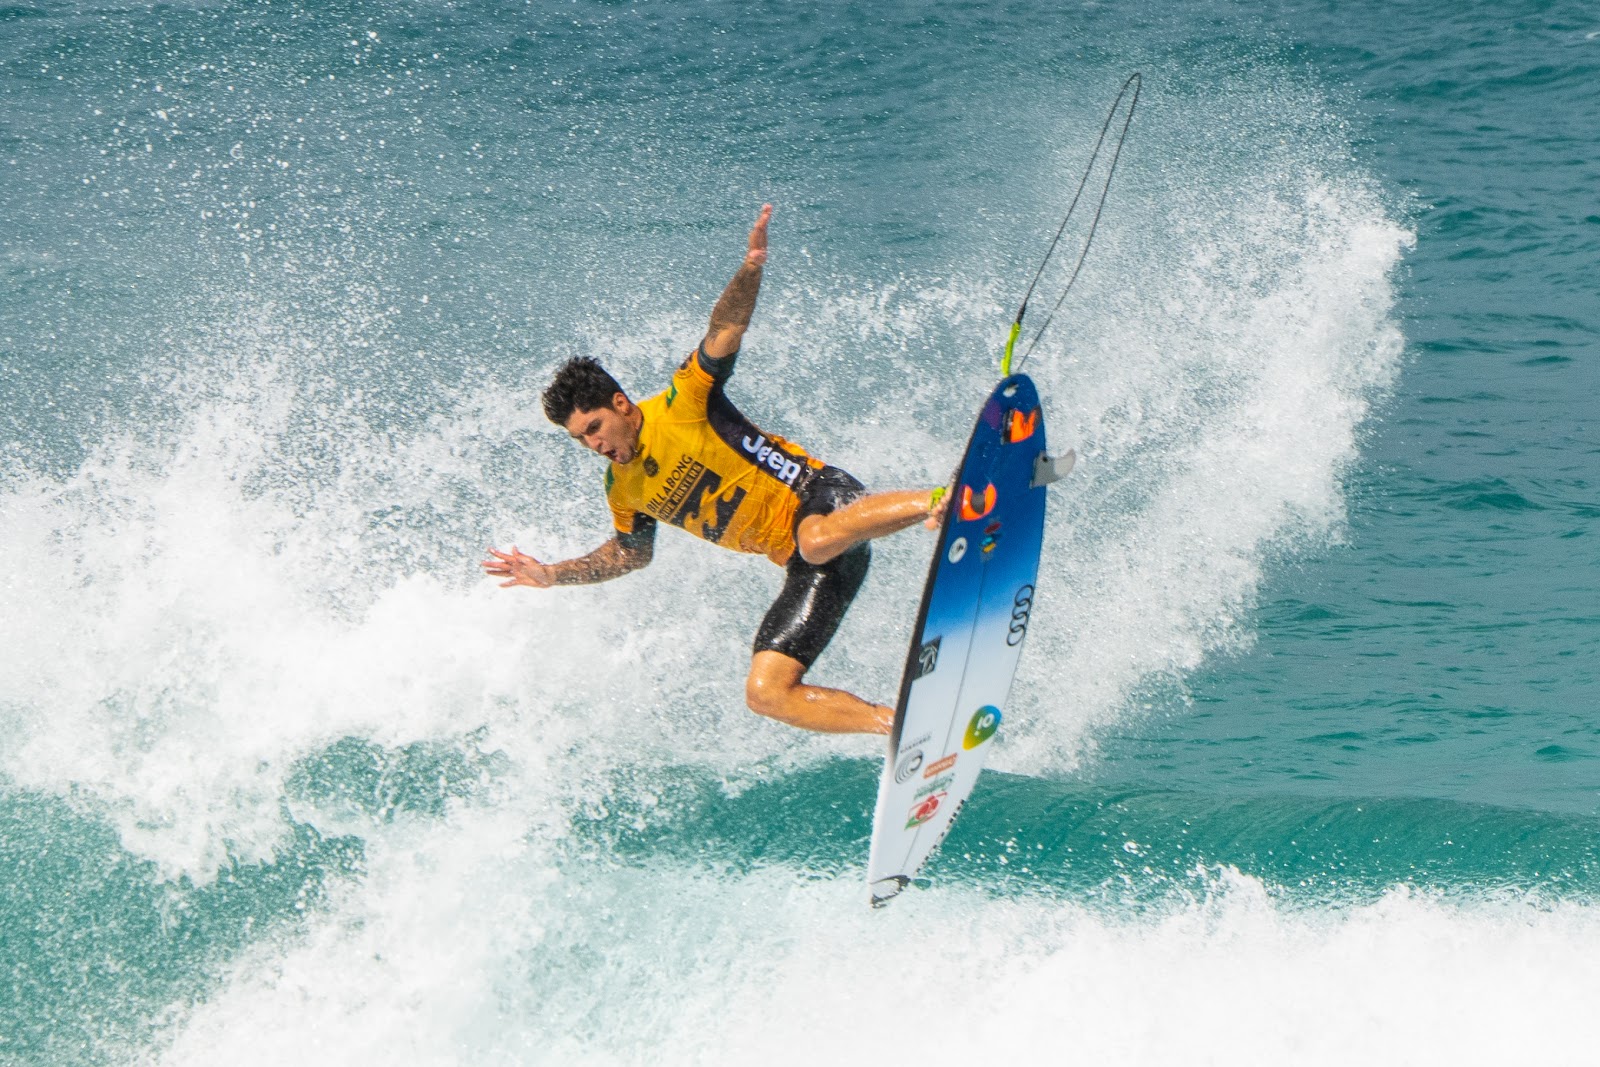 James Bondly Photograph of surfer